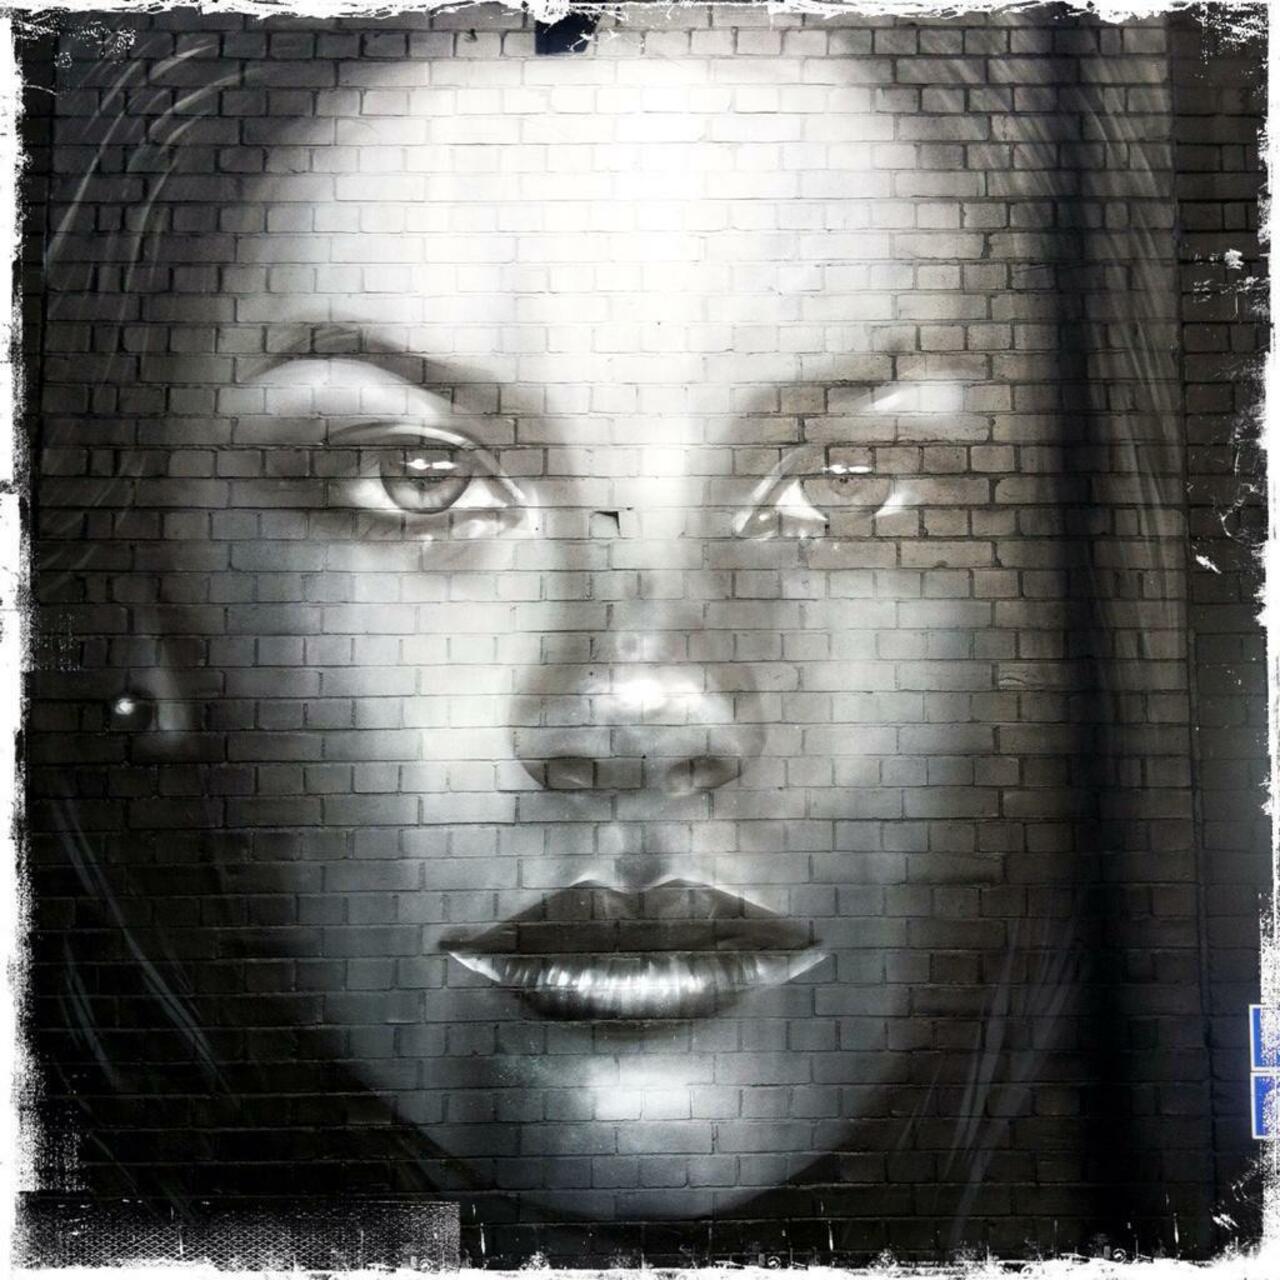 RT @richardbanfa: Beautiful work by @StarFighterA on Clare Street, Hackney #art #streetart #graffiti #switch #bedifferent #arte http://t.co/BQGRyJpcEj